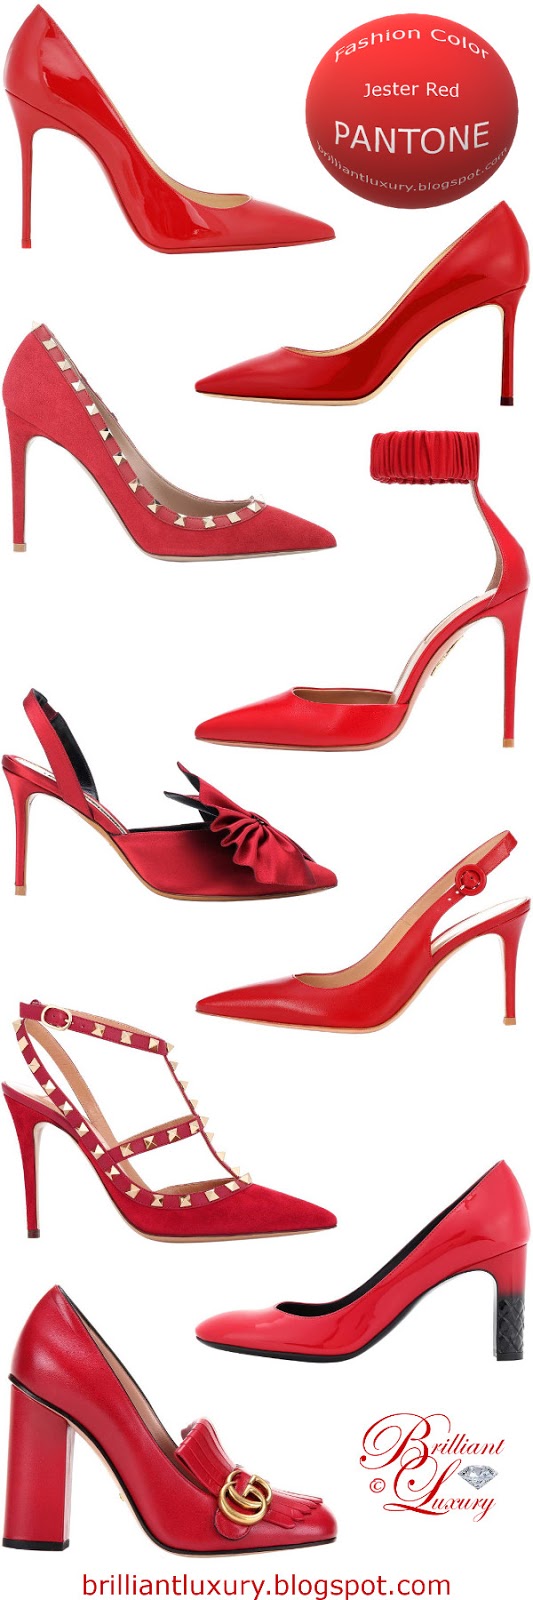 Brilliant Luxury ♦ Pantone Fashion Color ~ Jester Red